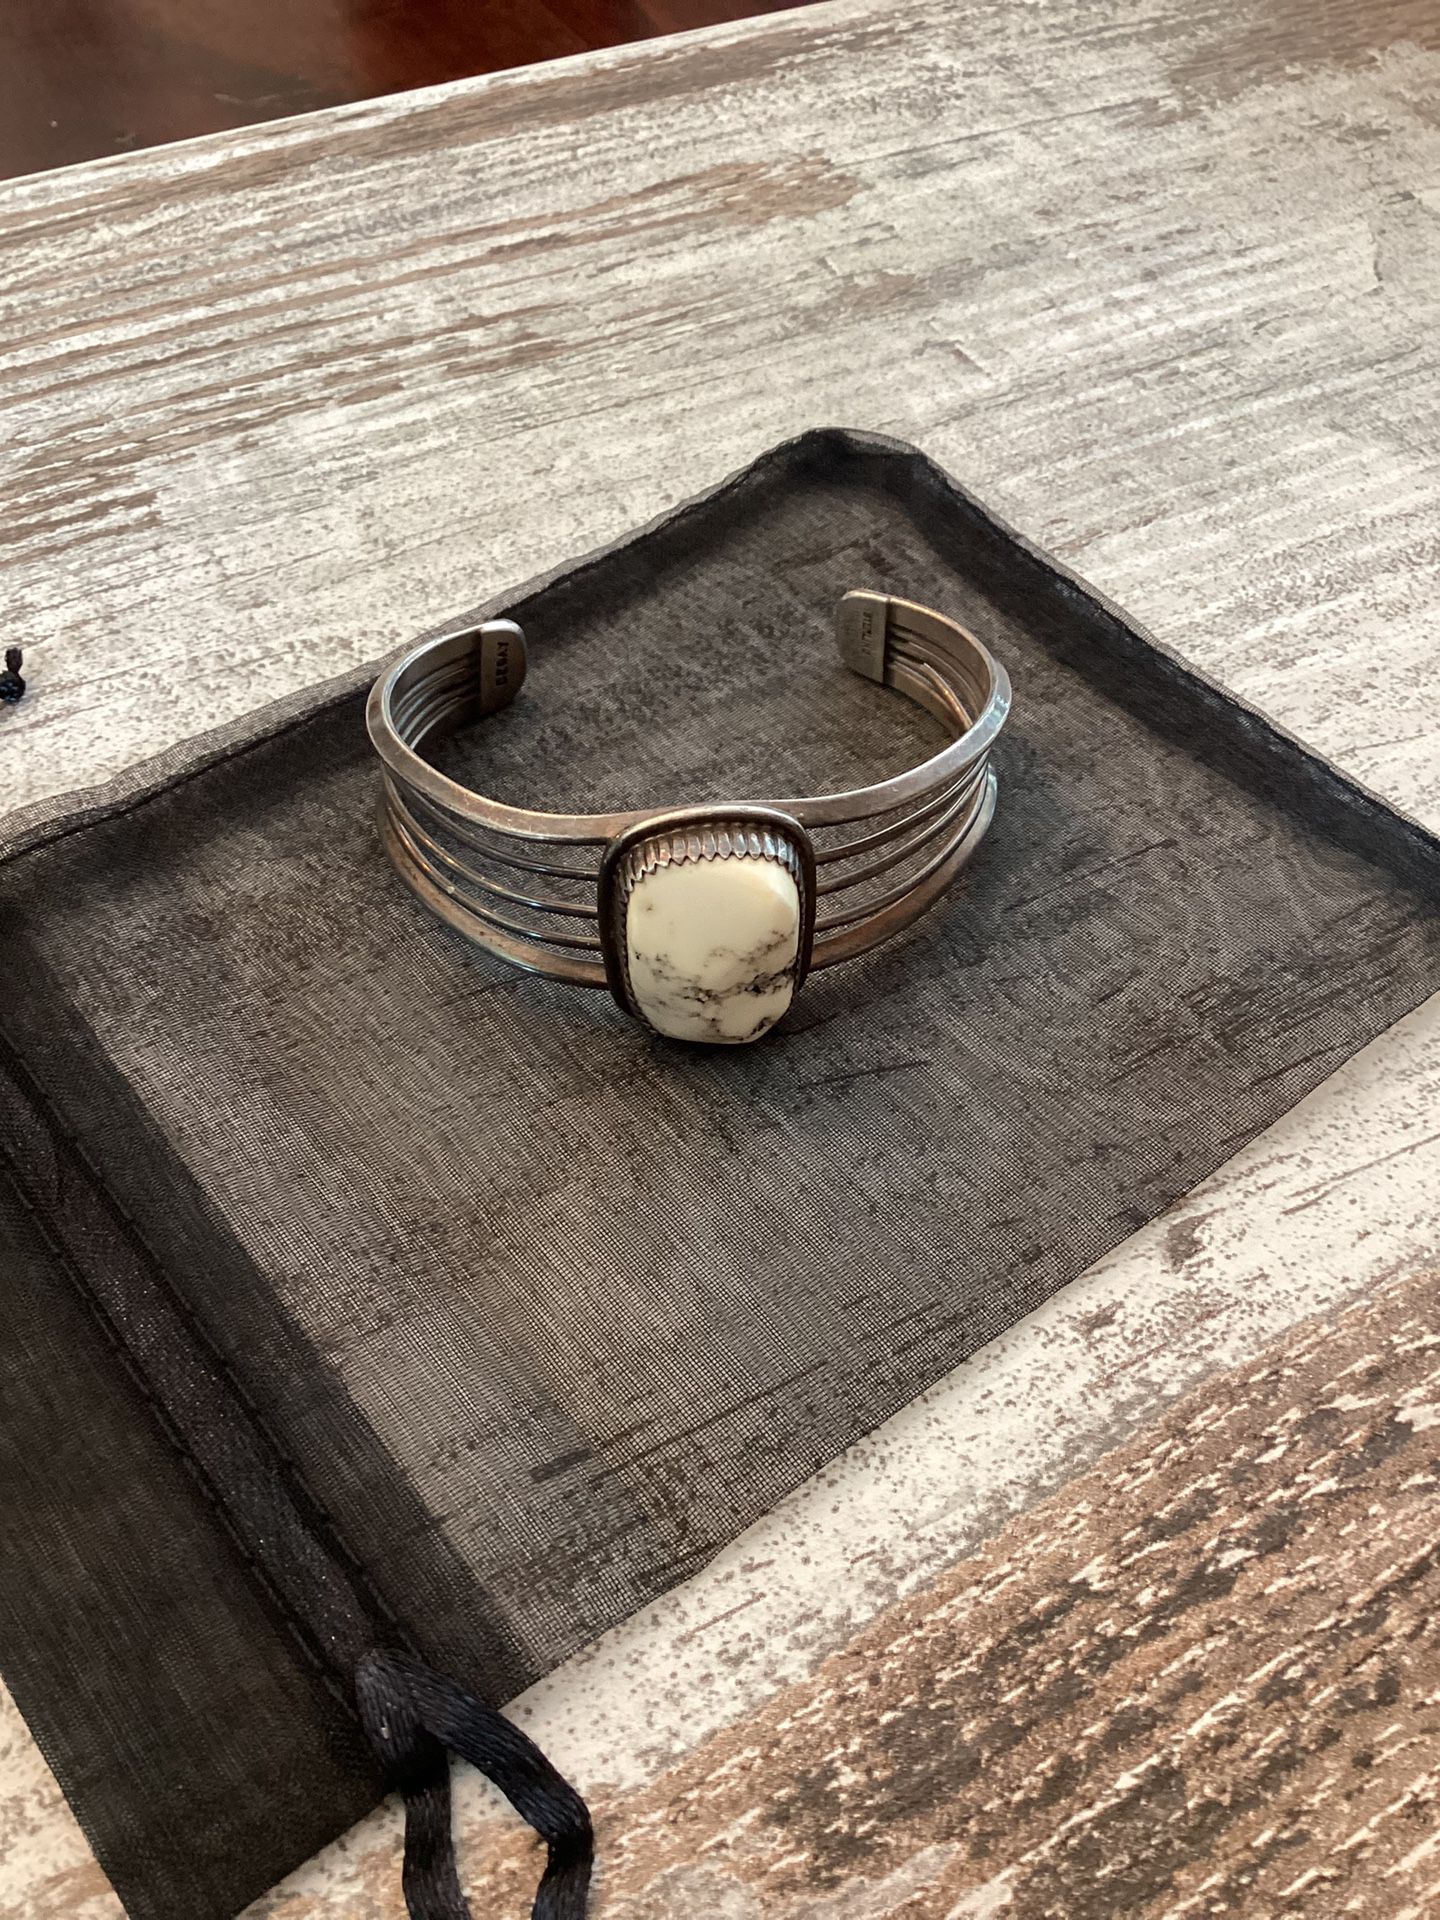 Vintage Begay Navajo Sterling Silver Bracelet with natural stone